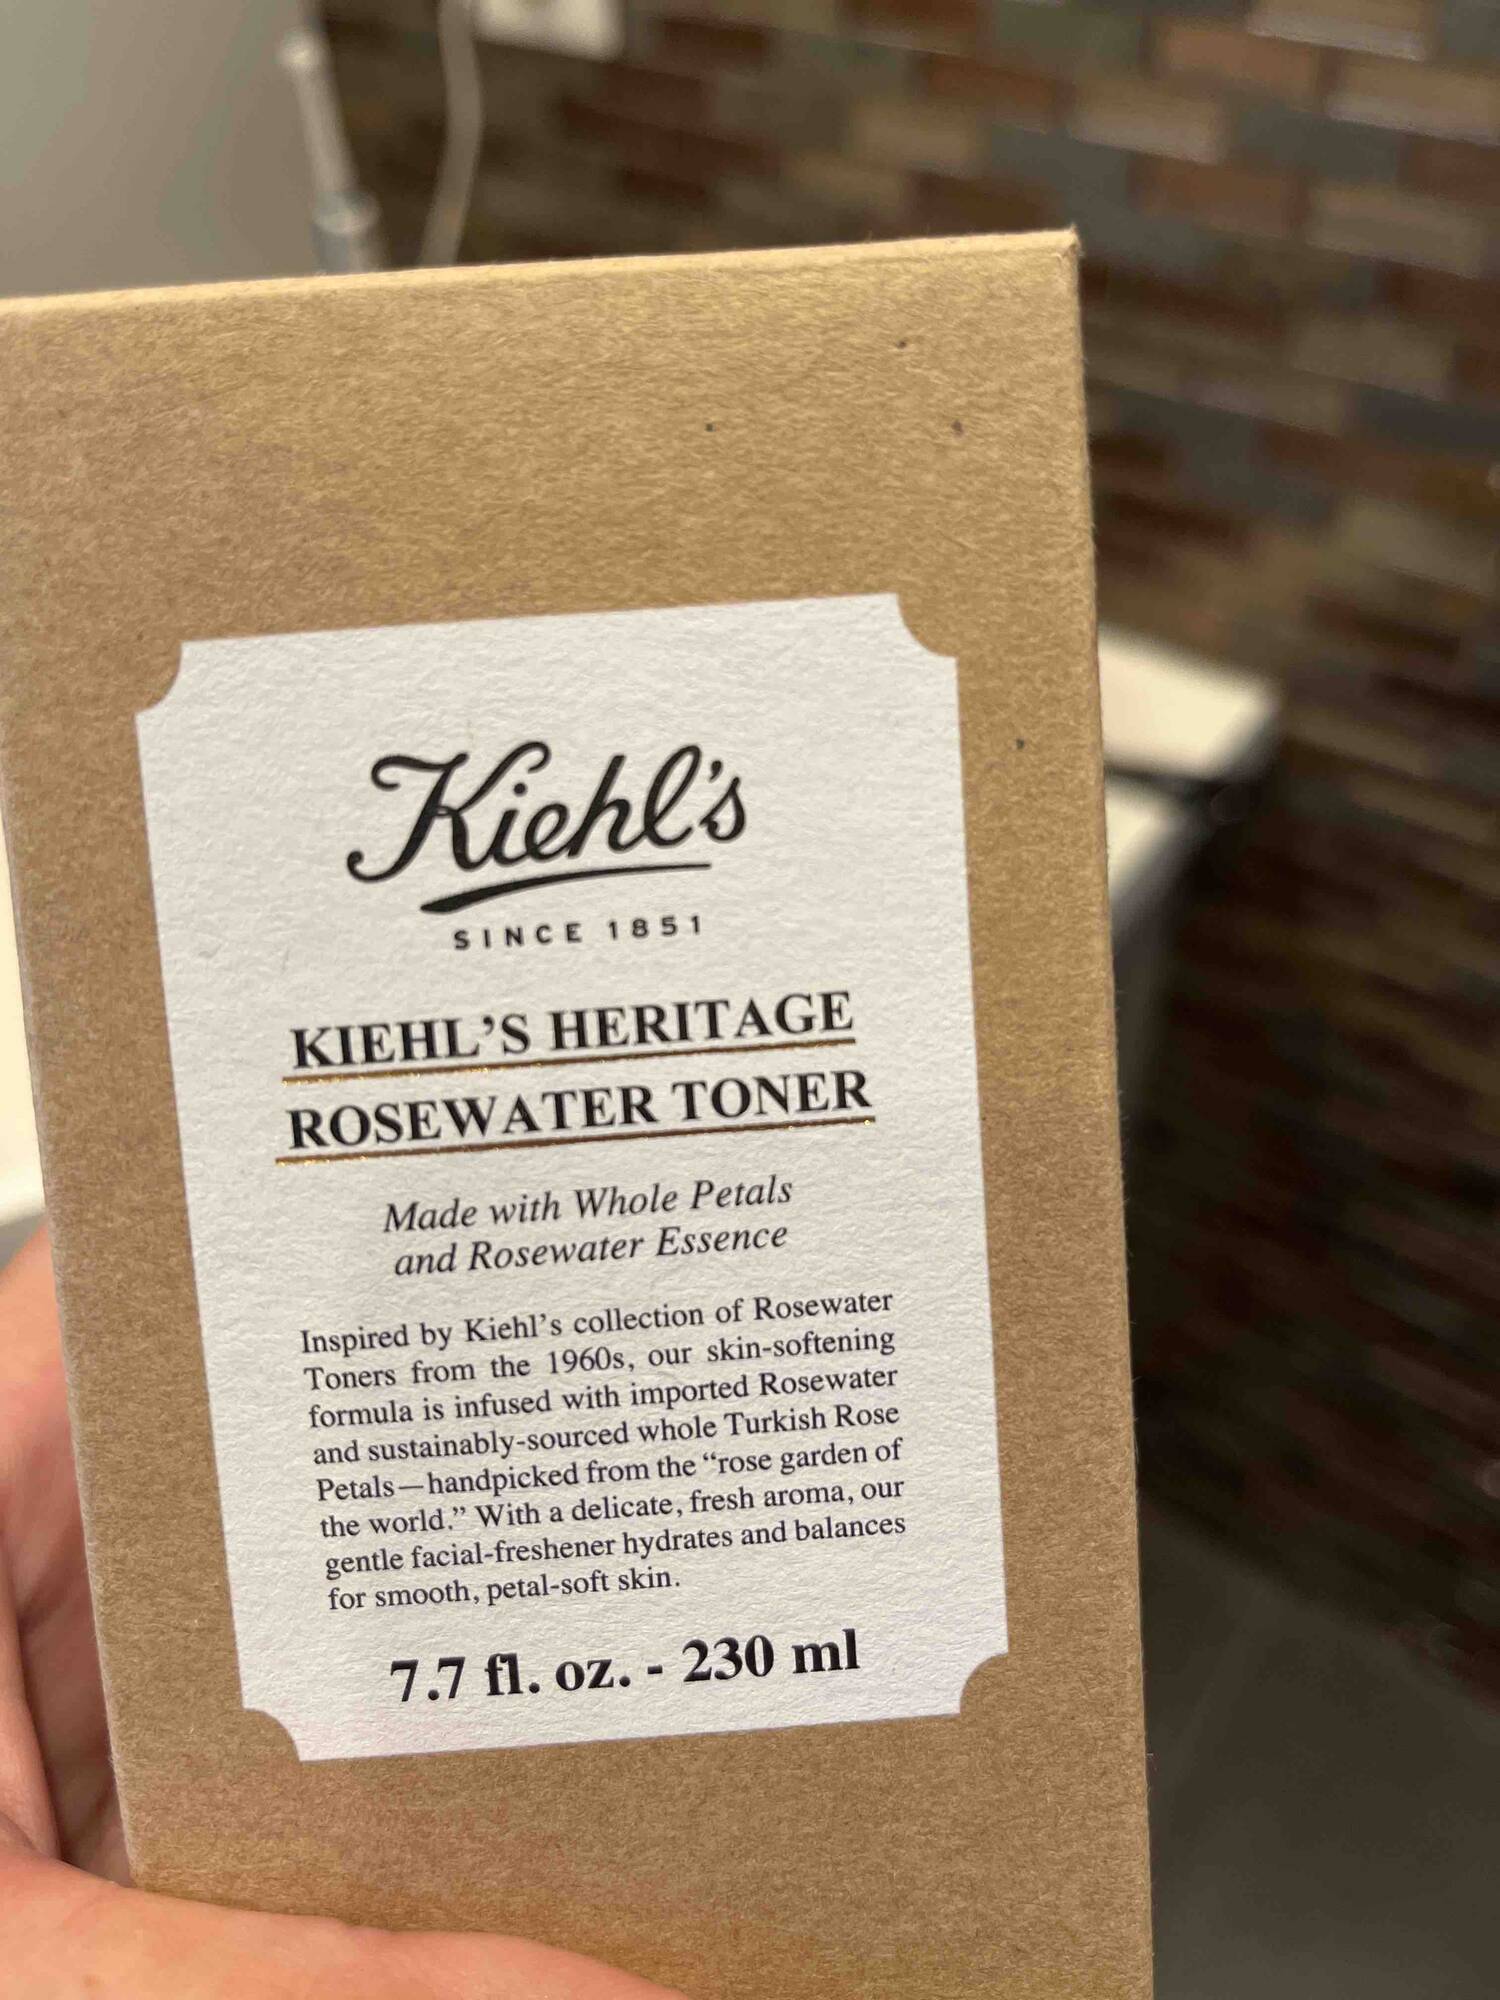 KIEHL'S - Kiehl's heritage rosewater toner